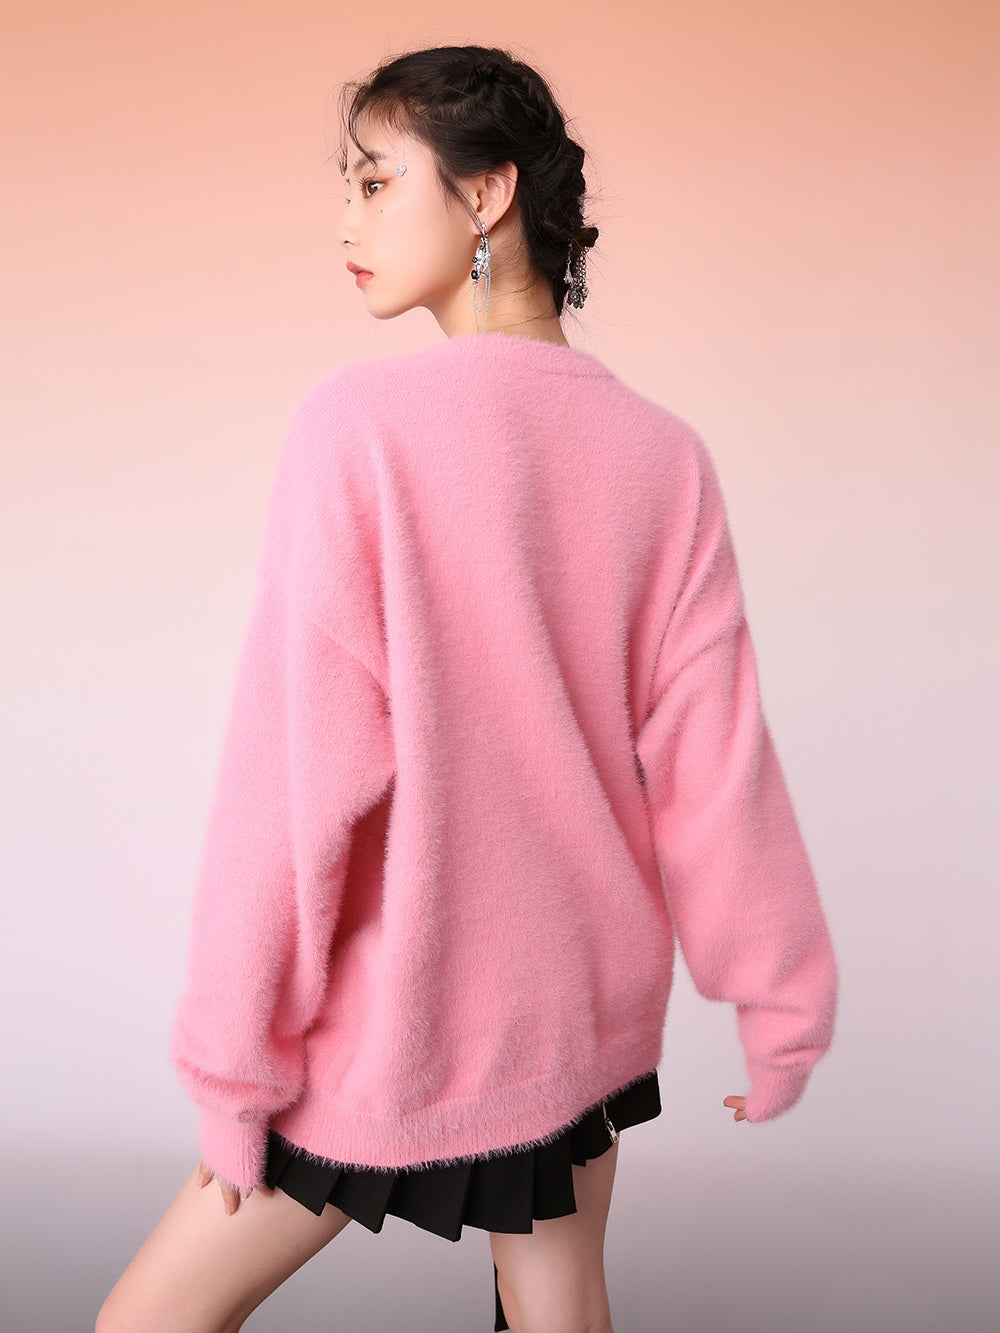 MUKZIN Artist Edition Pink Embroidered Sweater